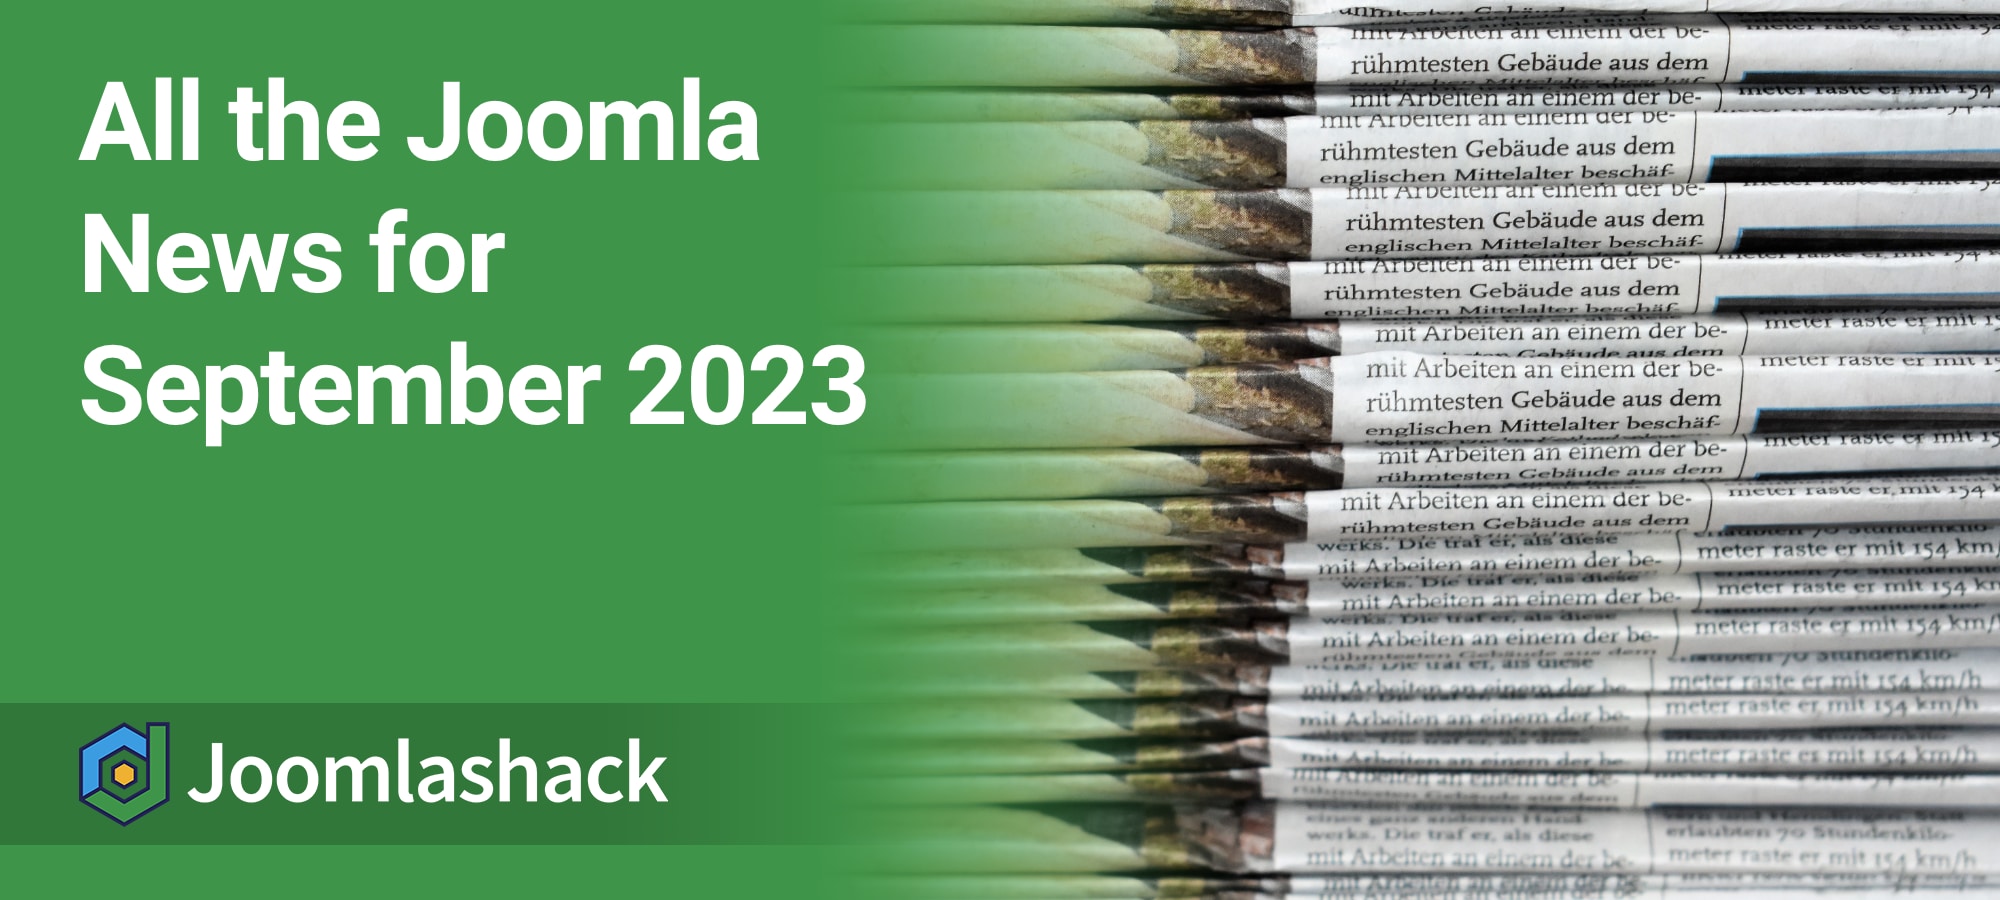  All the Joomla News for September 2023